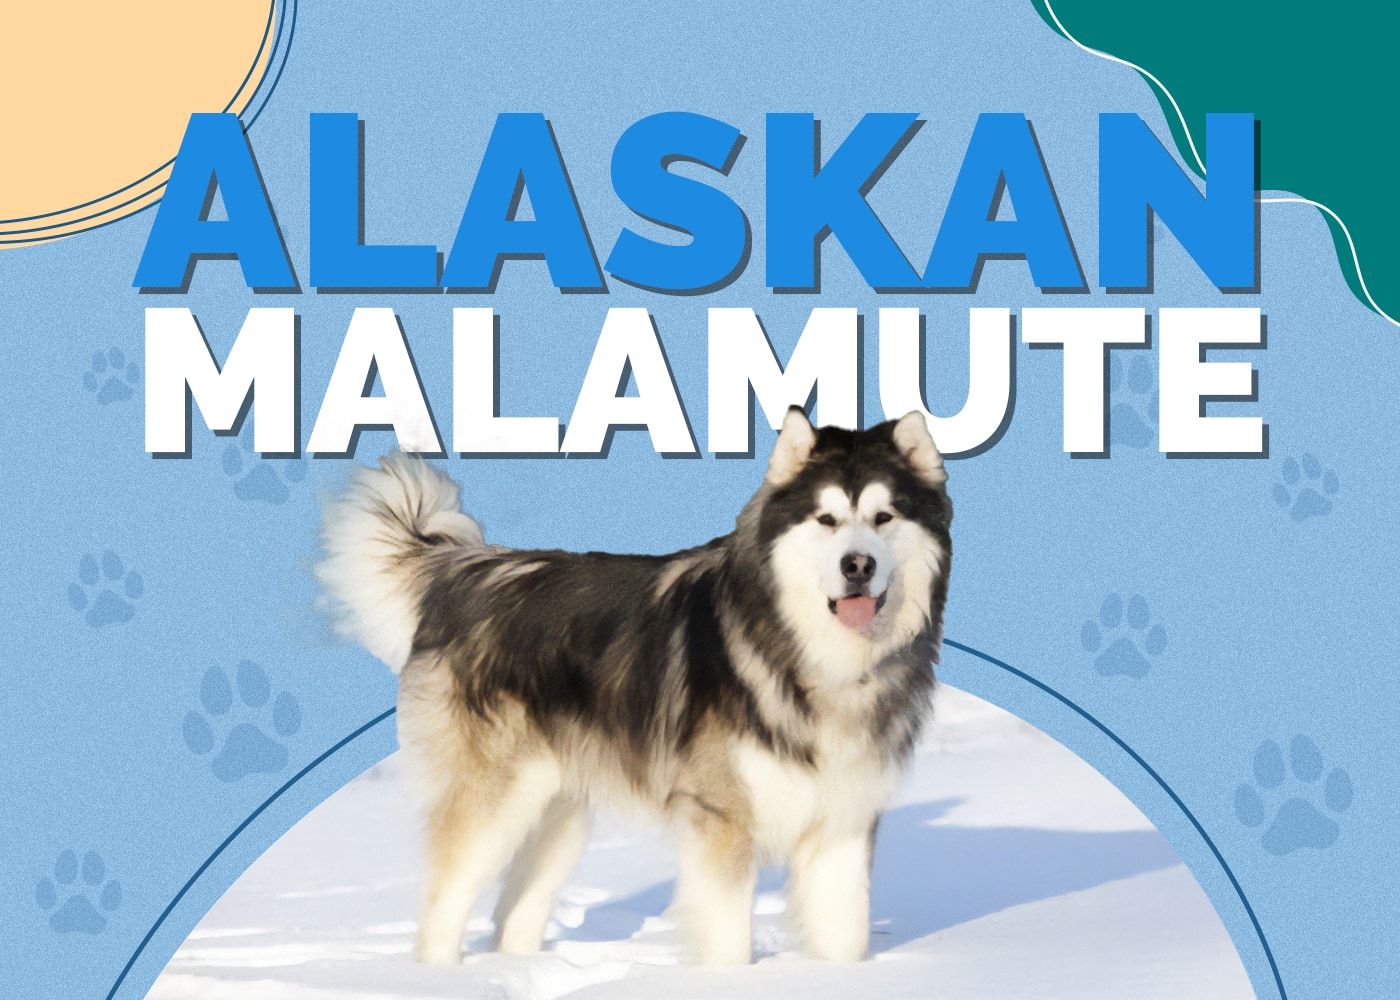 Giant Alaskan Malamute Dog